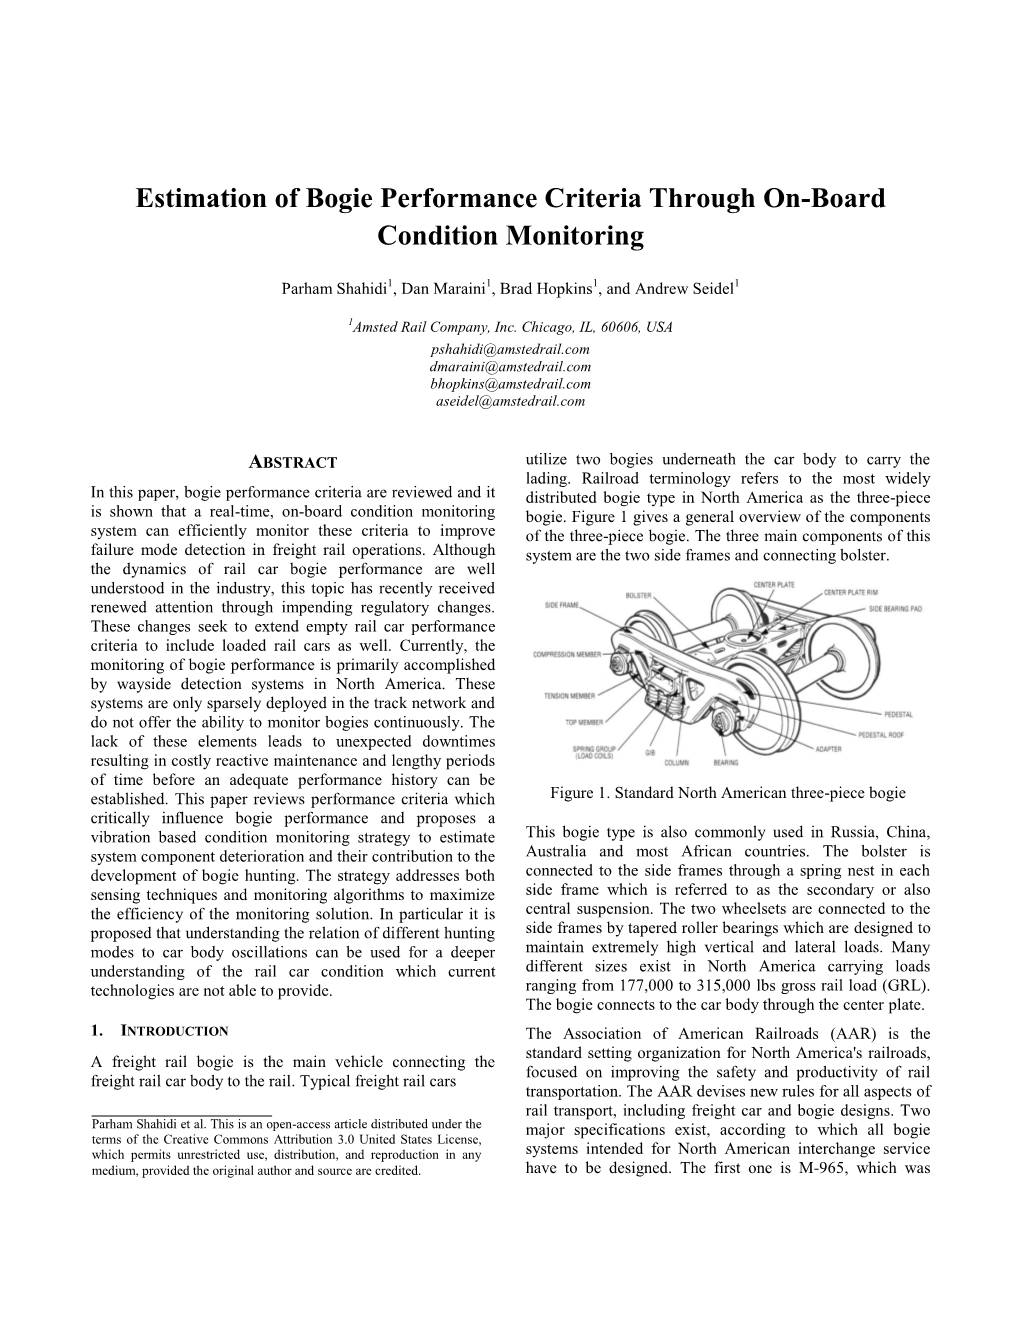 Estimation of Bogie Performance Criteria Through On-Board Condition Monitoring